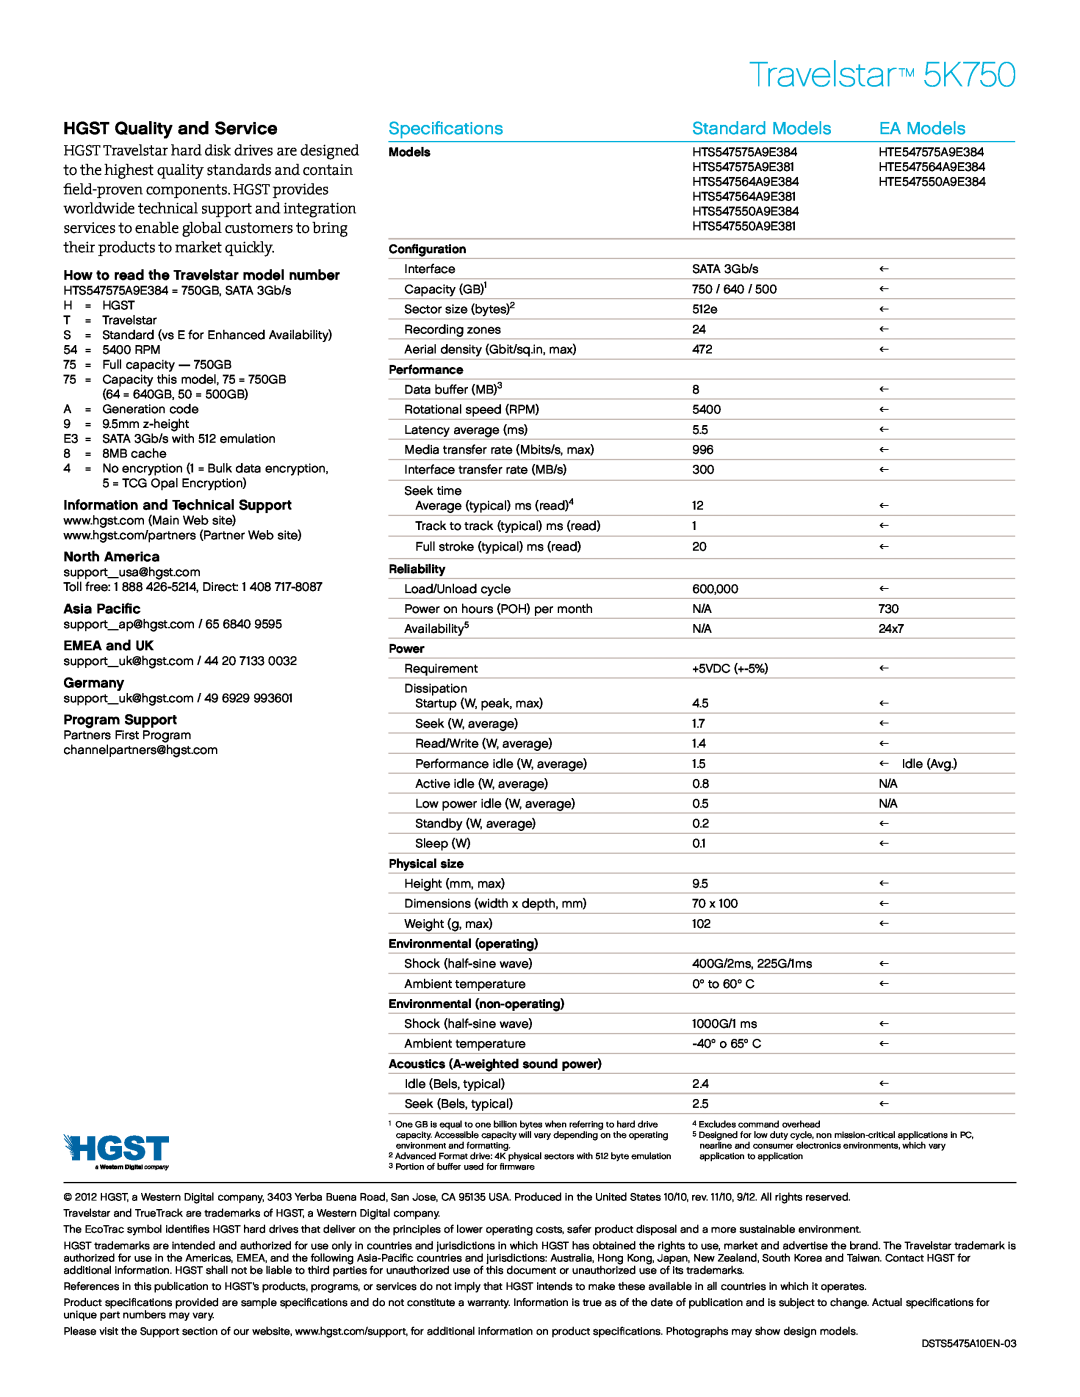 Hitachi HTS543232L9SA00 manual HGST Quality and Service, Specifications, Standard Models, EA Models, Travelstar 5K750 